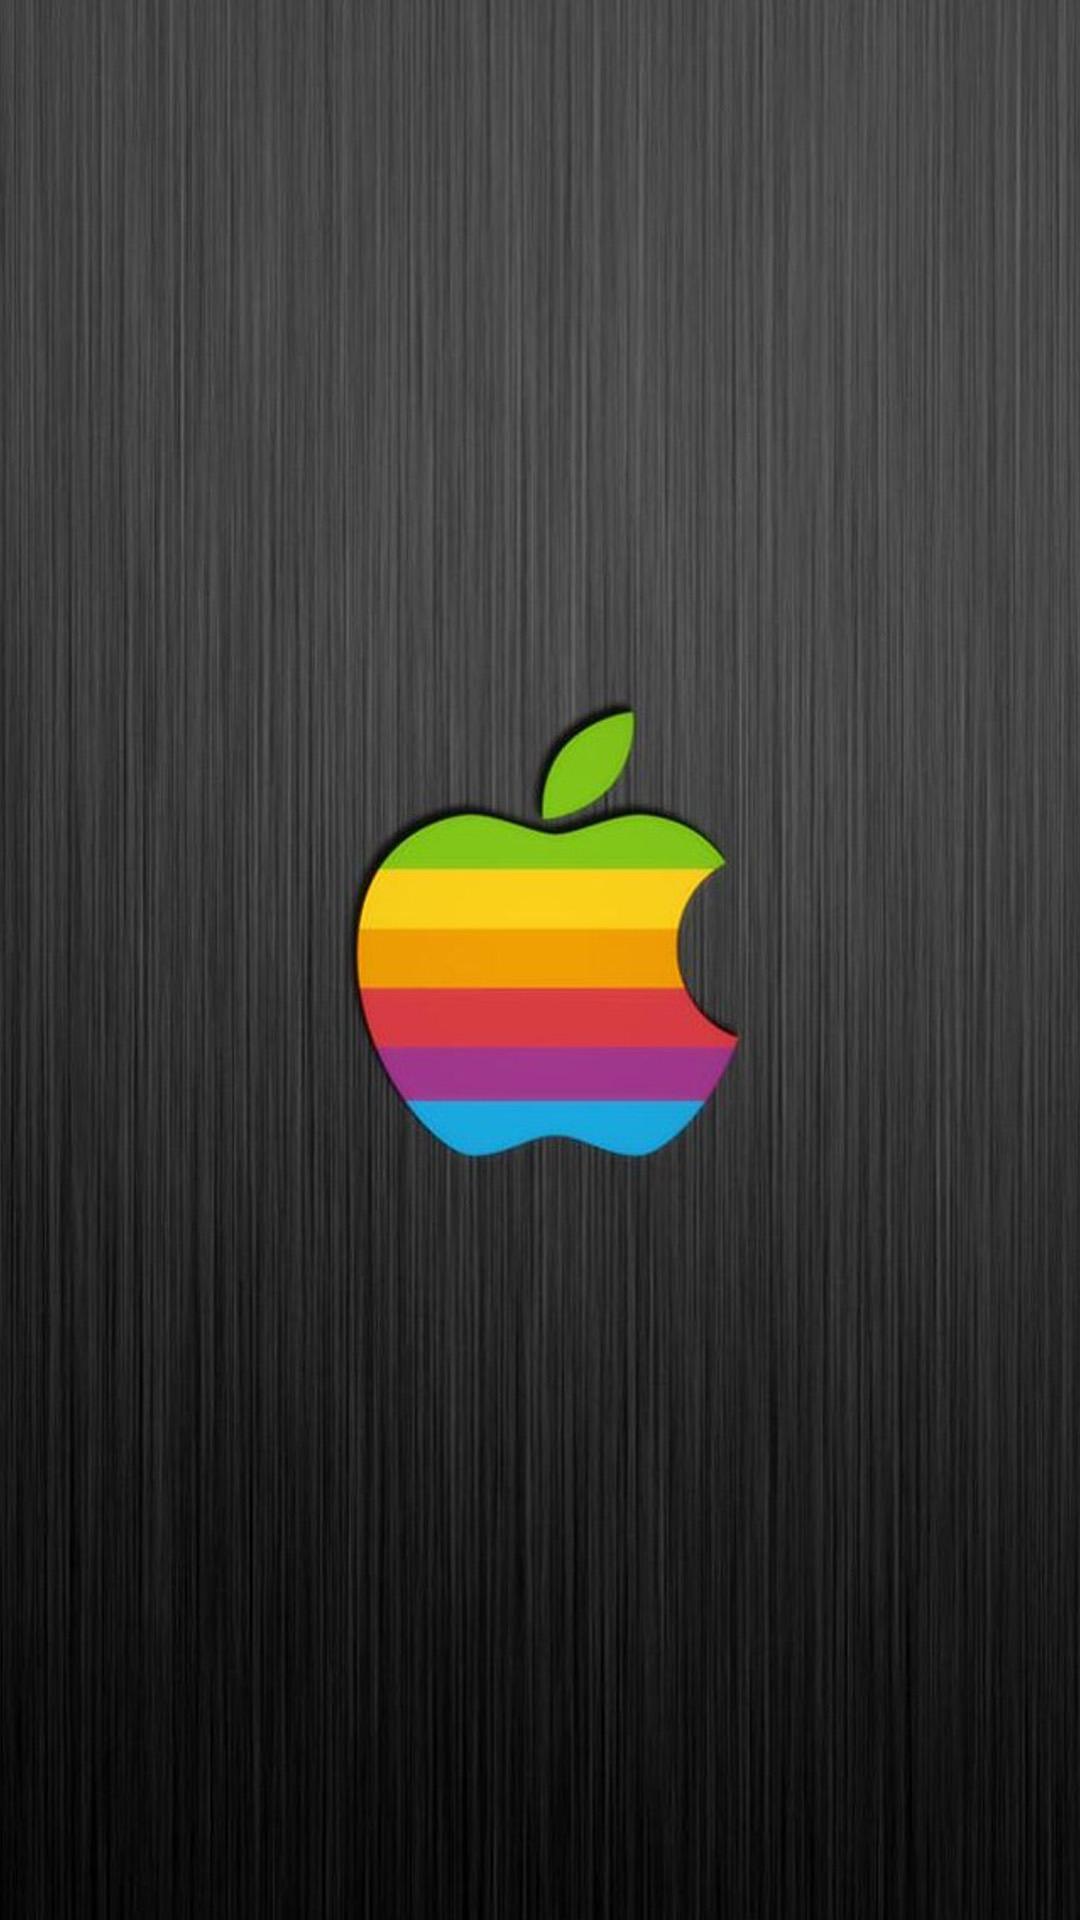 Apple logo for iphone user high definition wallpaper. High